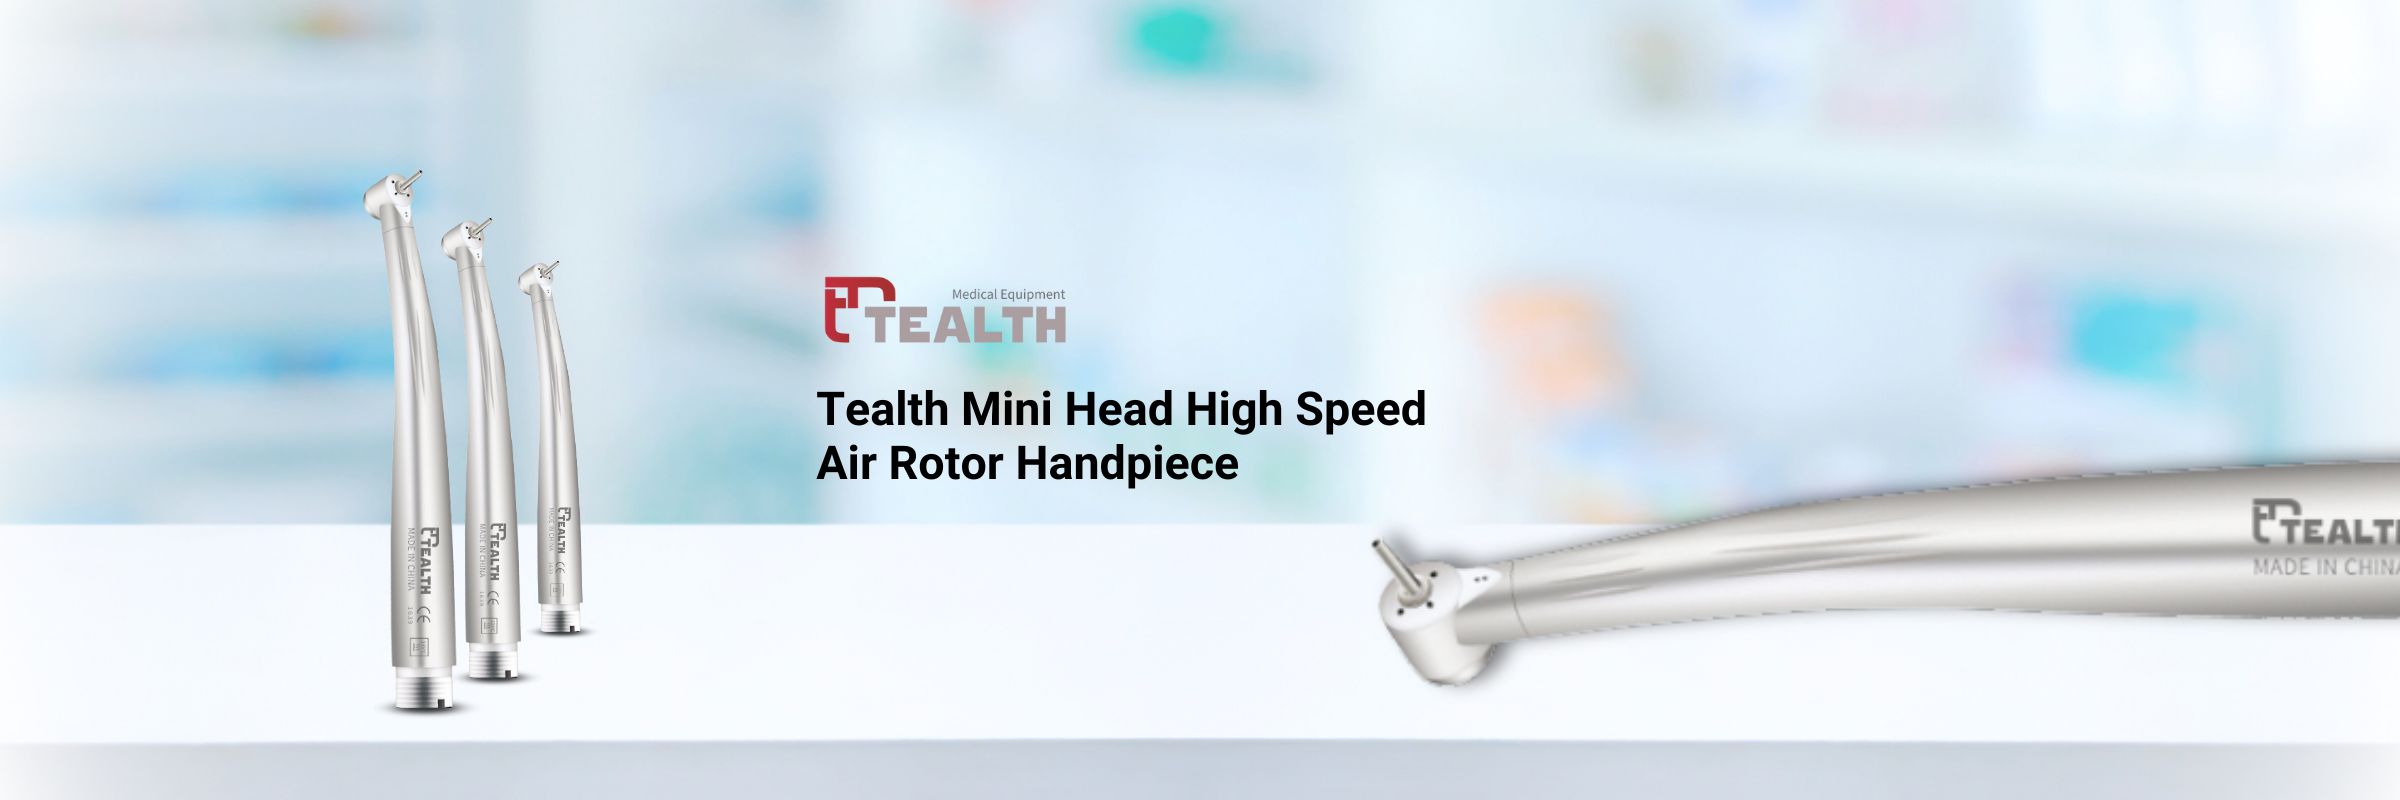 Tealth Mini Head High Speed Air Rotor Handpiece